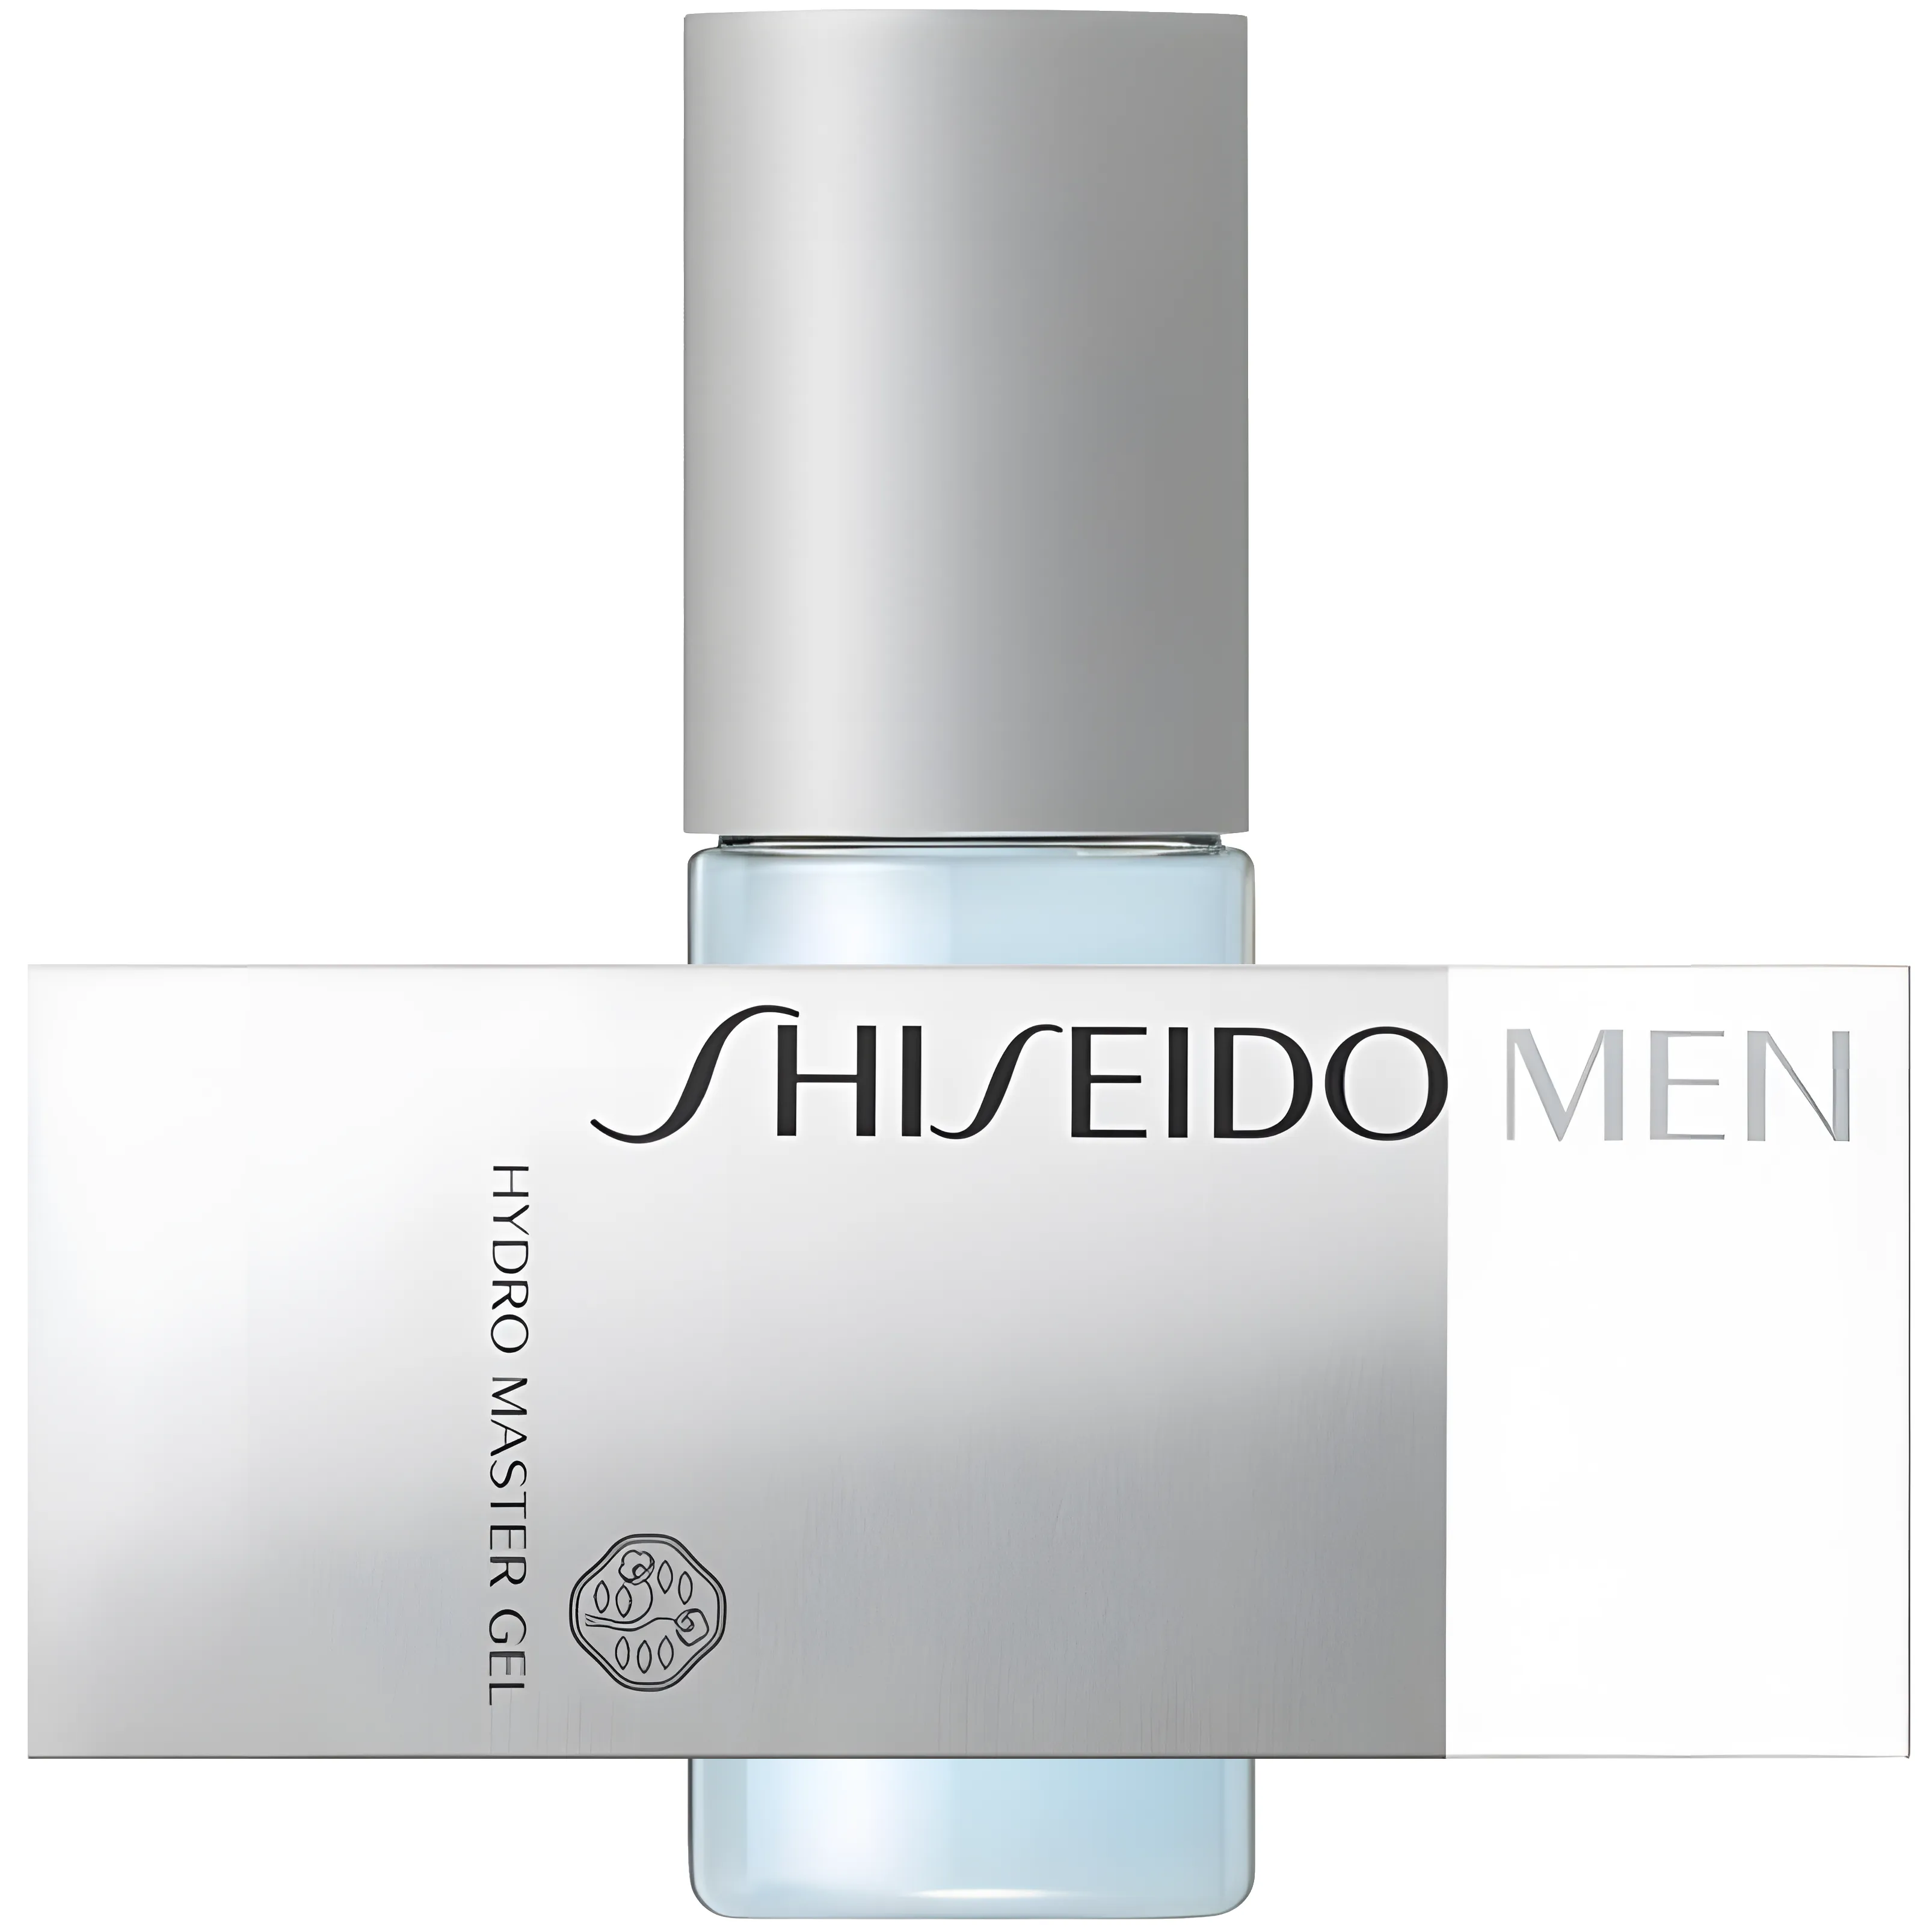 Free Shiseido Men Hydro Master Gel Moisturizes